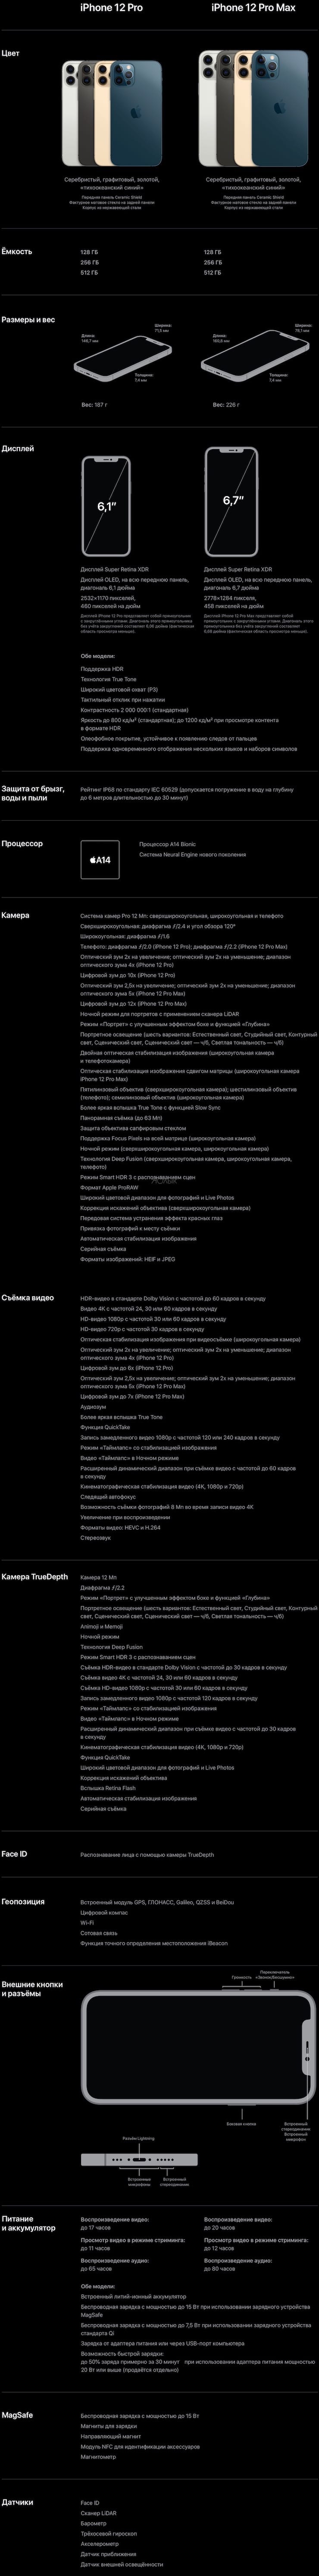 Сравнение технических характеристик (спецификаций) iPhone 12 Pro и iPhone 12 Pro Max